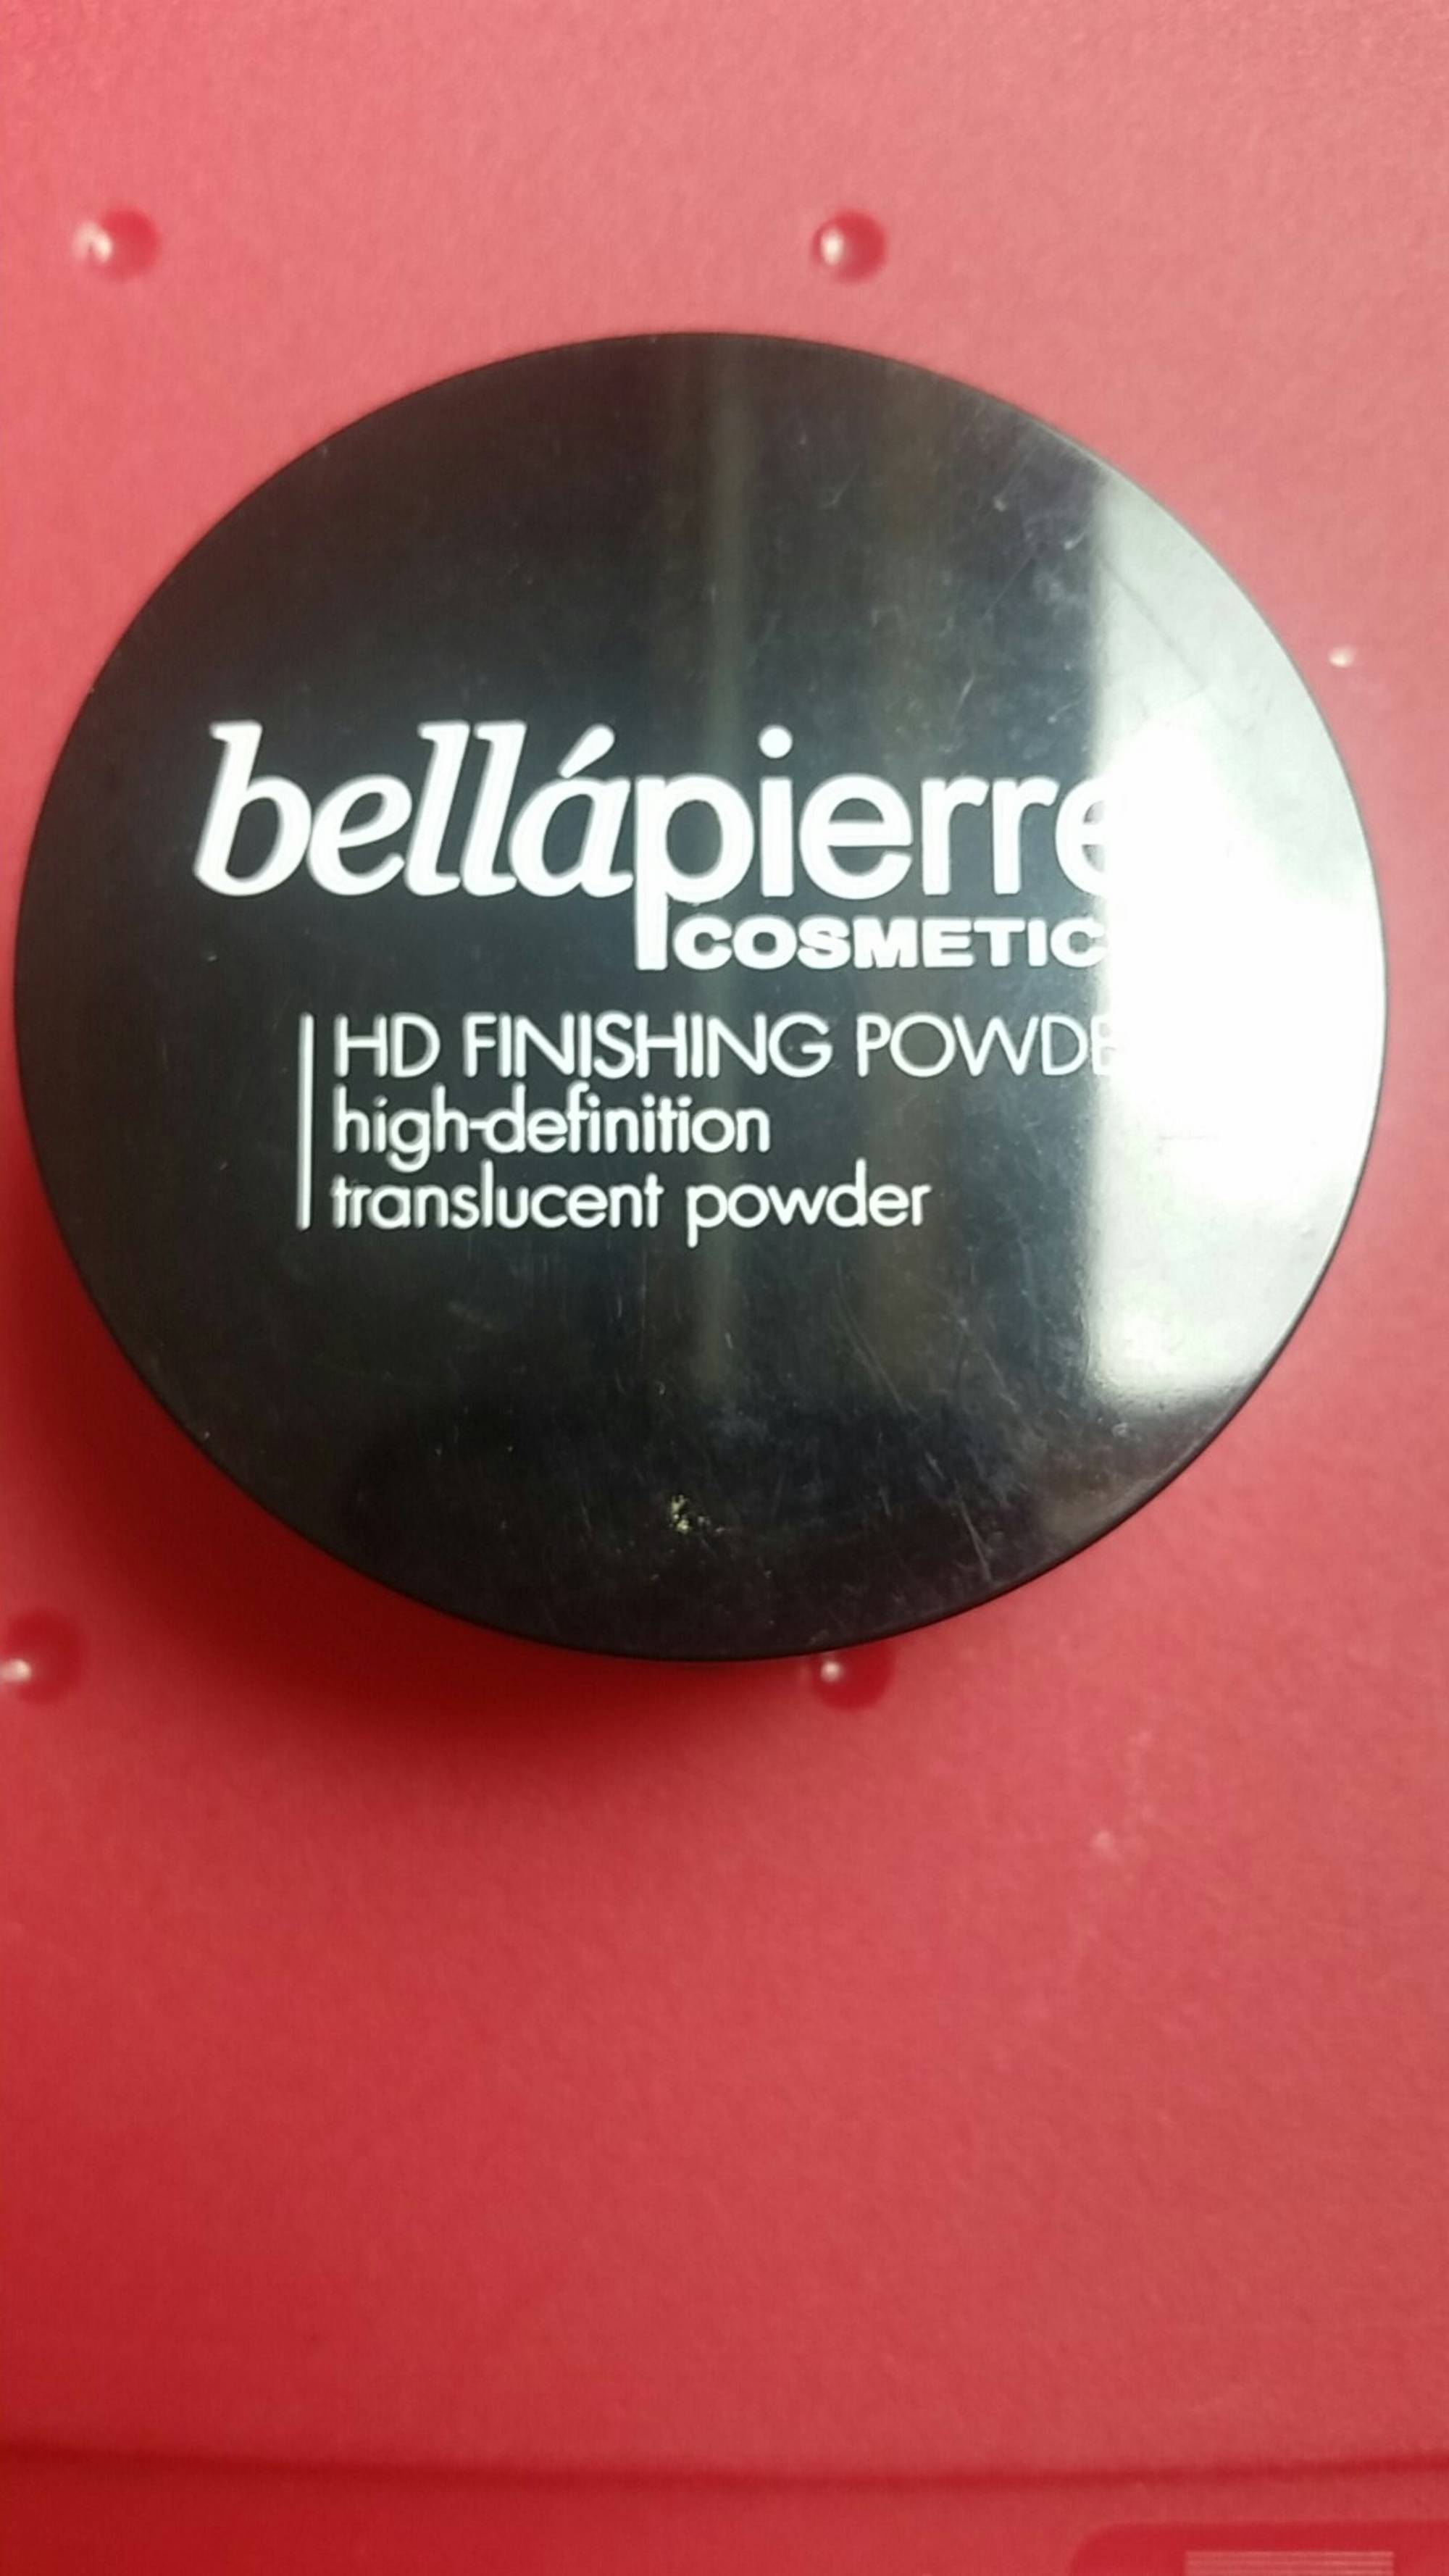 BELLAPIERRE COSMETICS - HD finishing powder